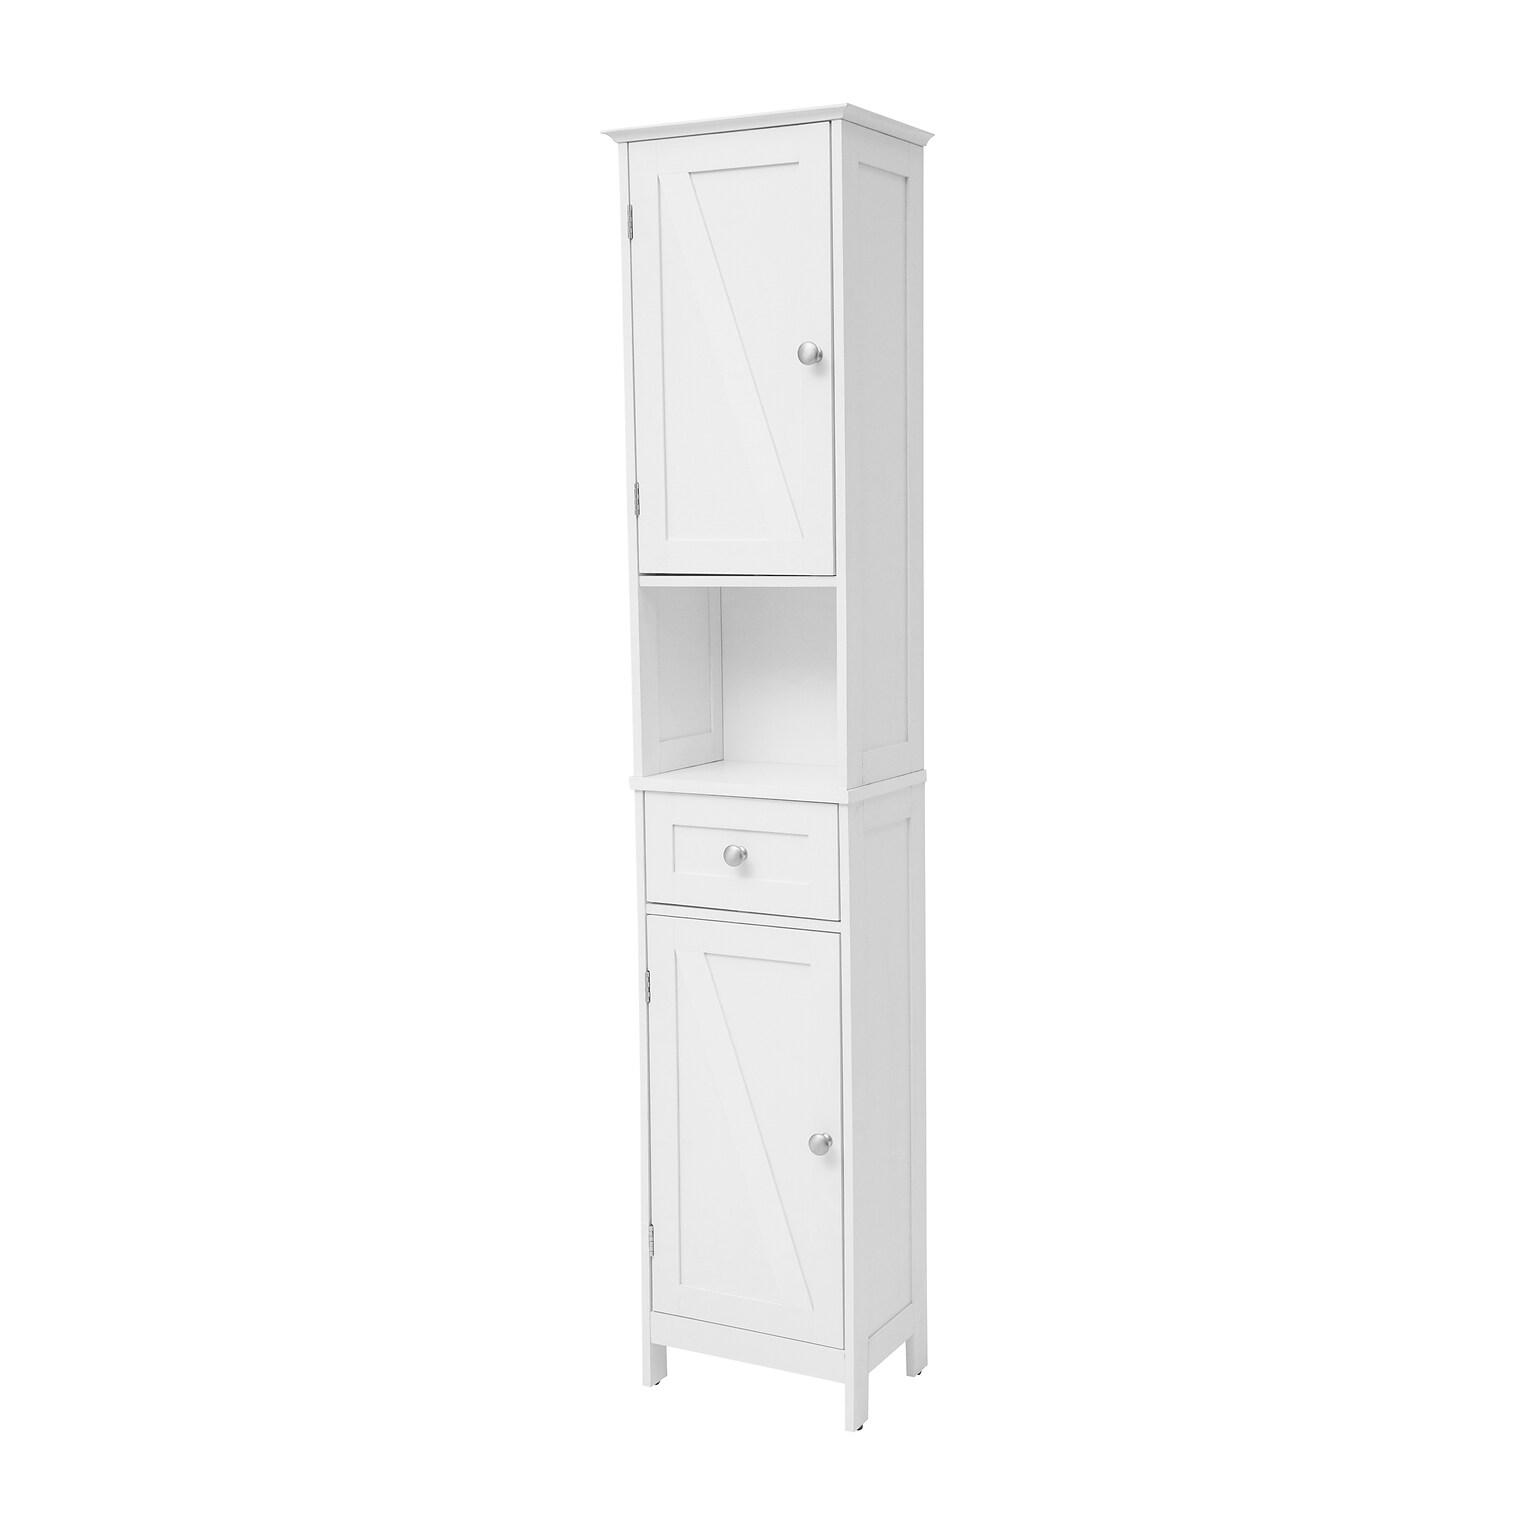 Flash Furniture Dune 70 Freestanding Bathroom Linen Tower Storage Cabinet with 5 Shelves, White (FSBATH6WH)